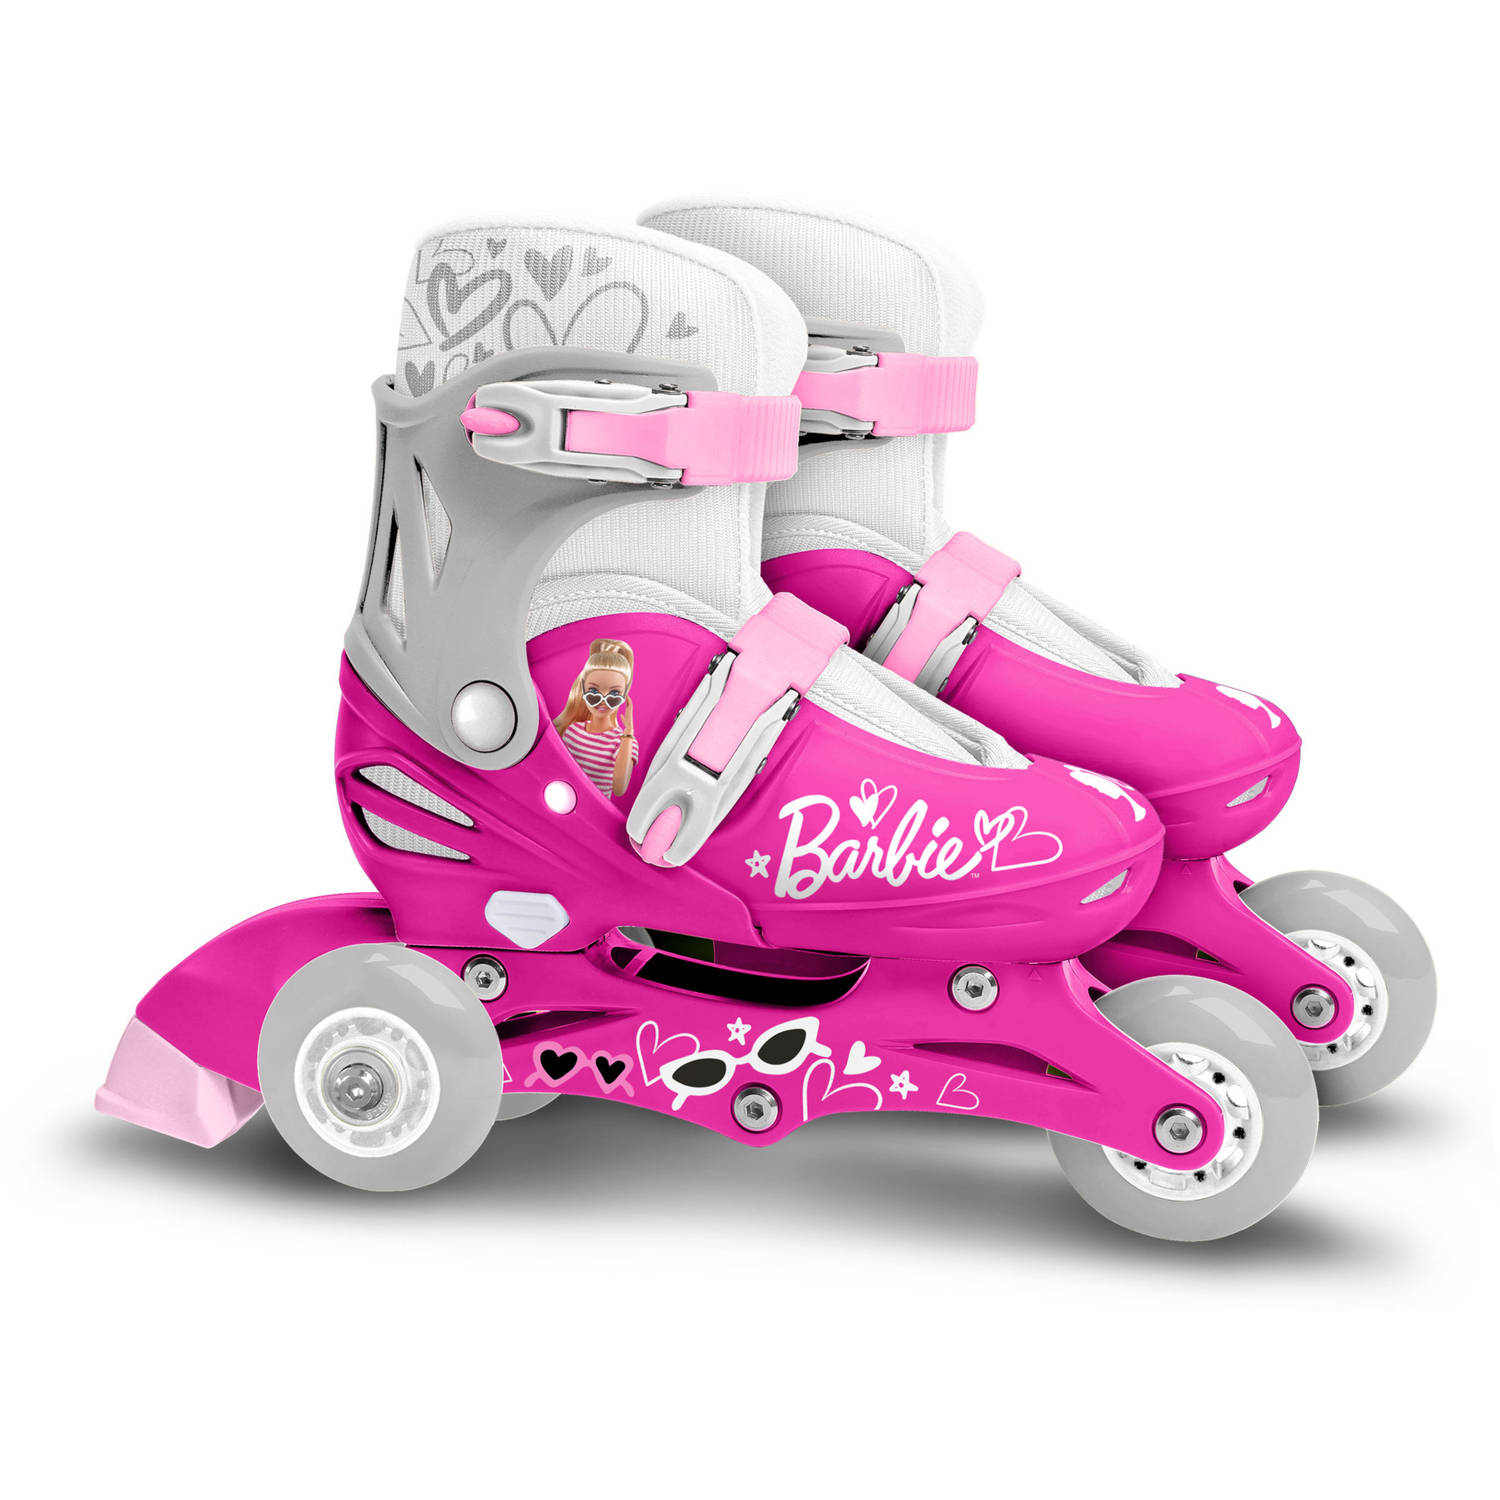 Stamp 2-in-1 skates Barbie hardboot verstelbaar roze-wit maat 27-30